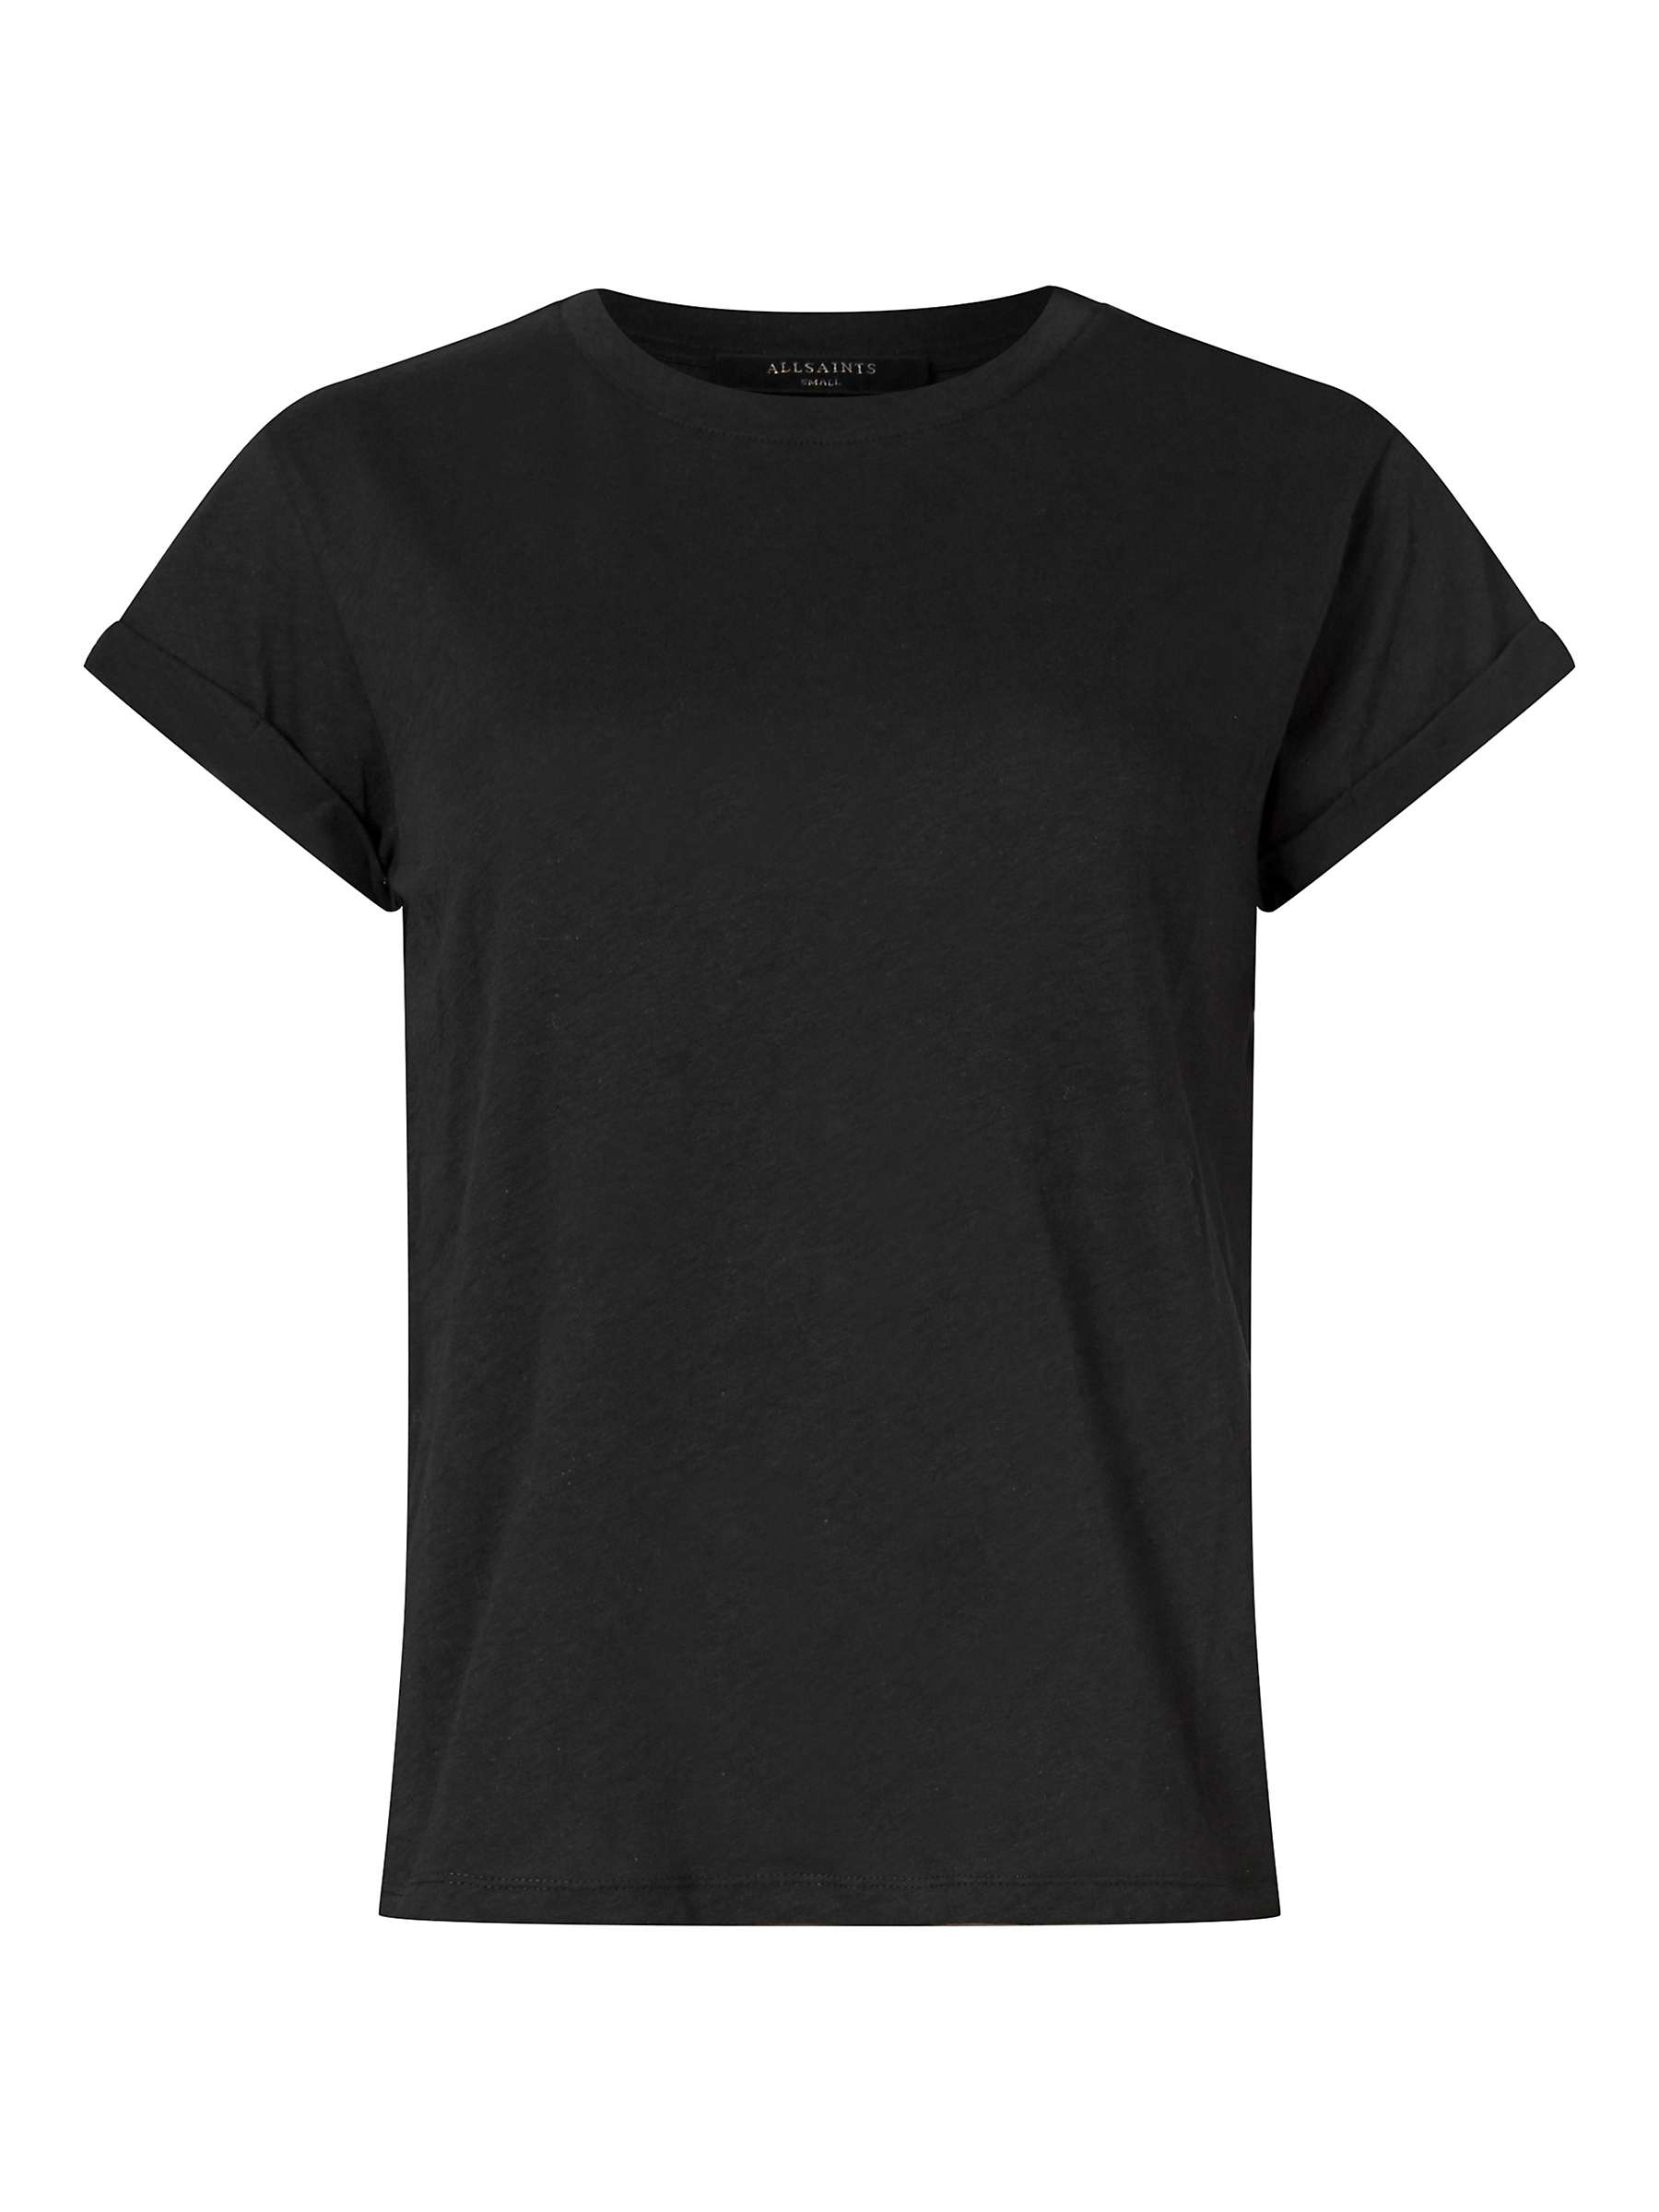 Buy AllSaints Anna Short Sleeve T-Shirt Online at johnlewis.com